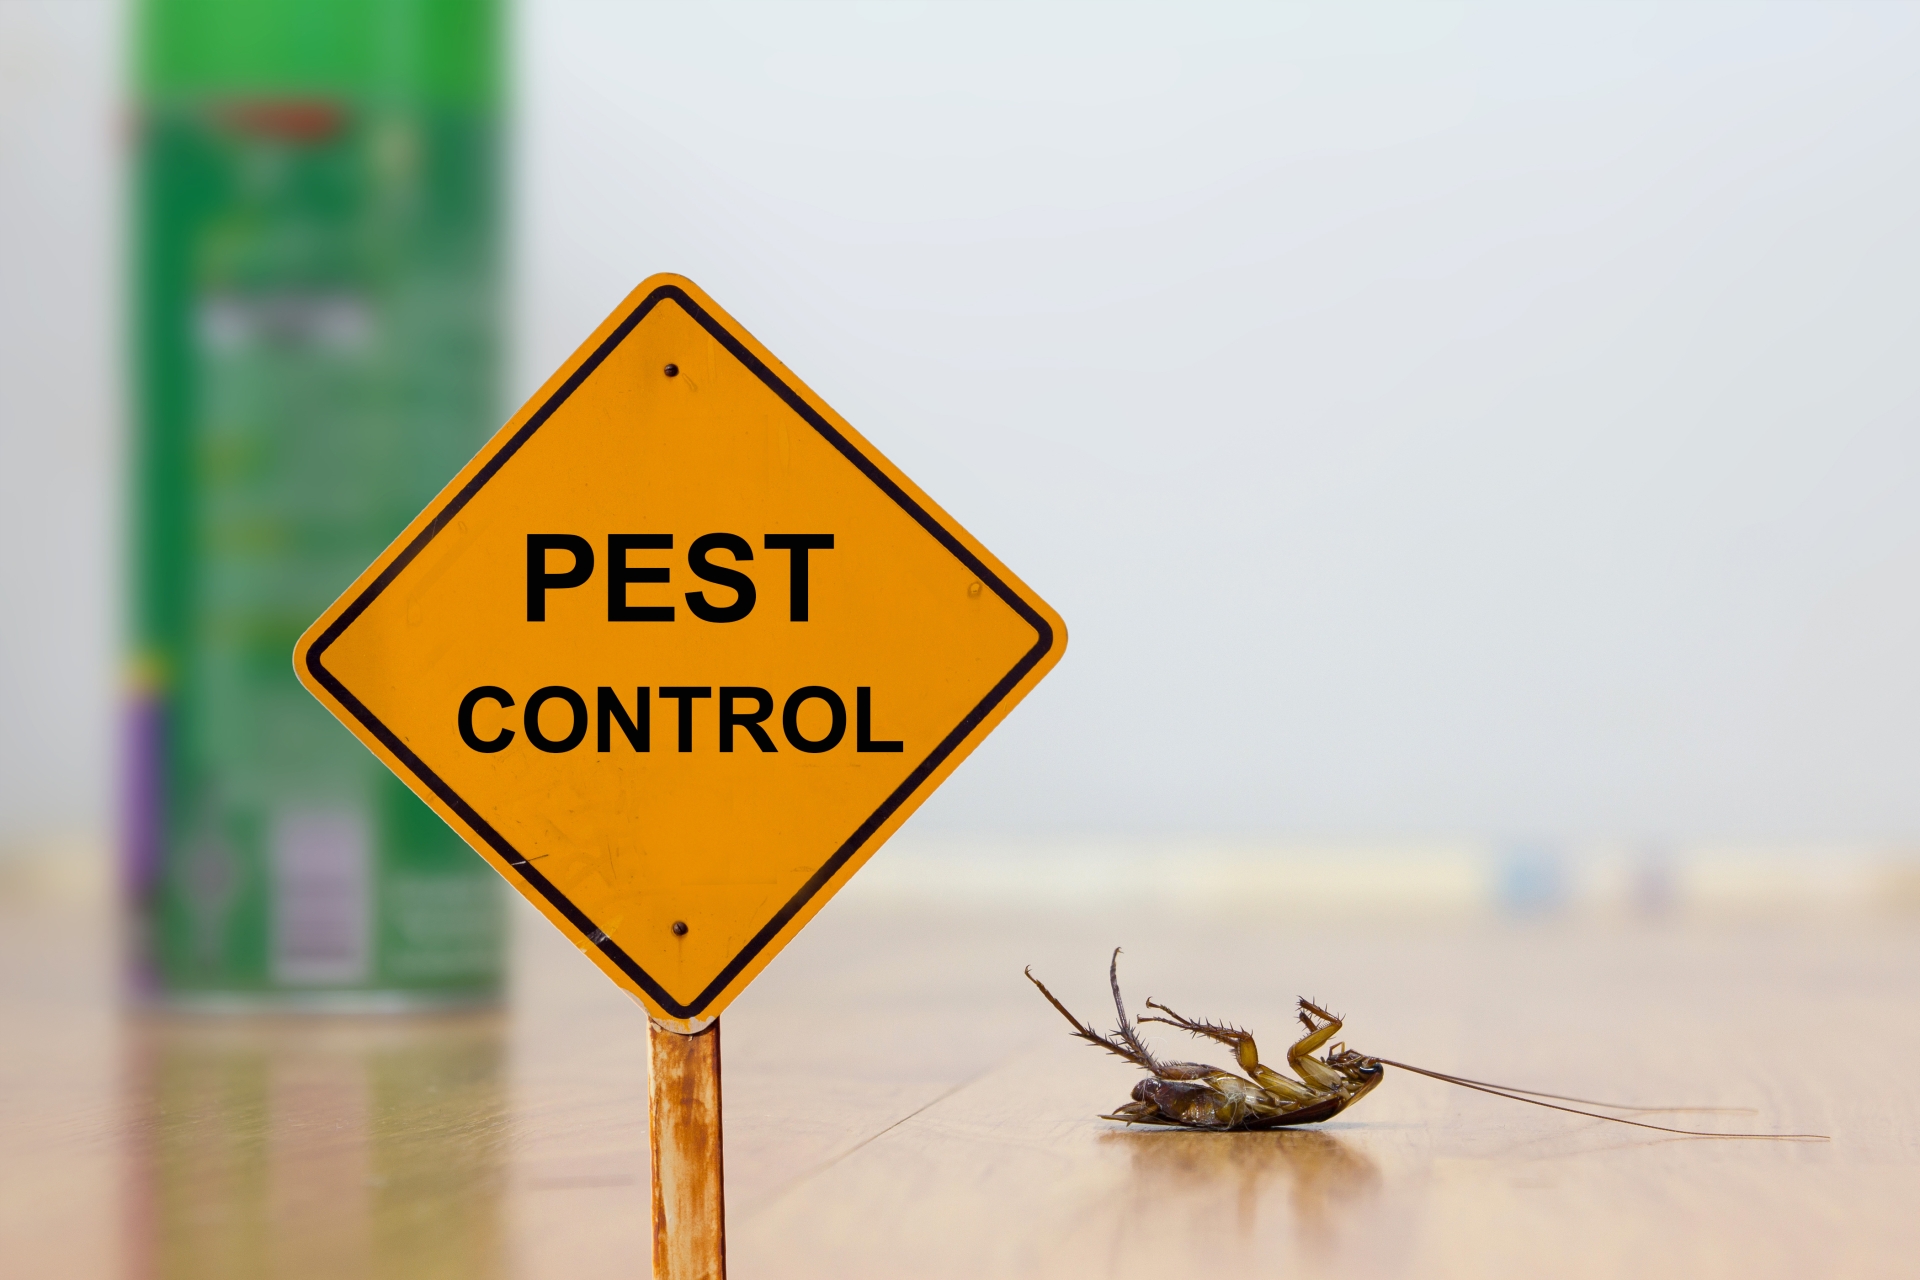 24 Hour Pest Control, Pest Control in Hackney, Homerton, E9. Call Now 020 8166 9746